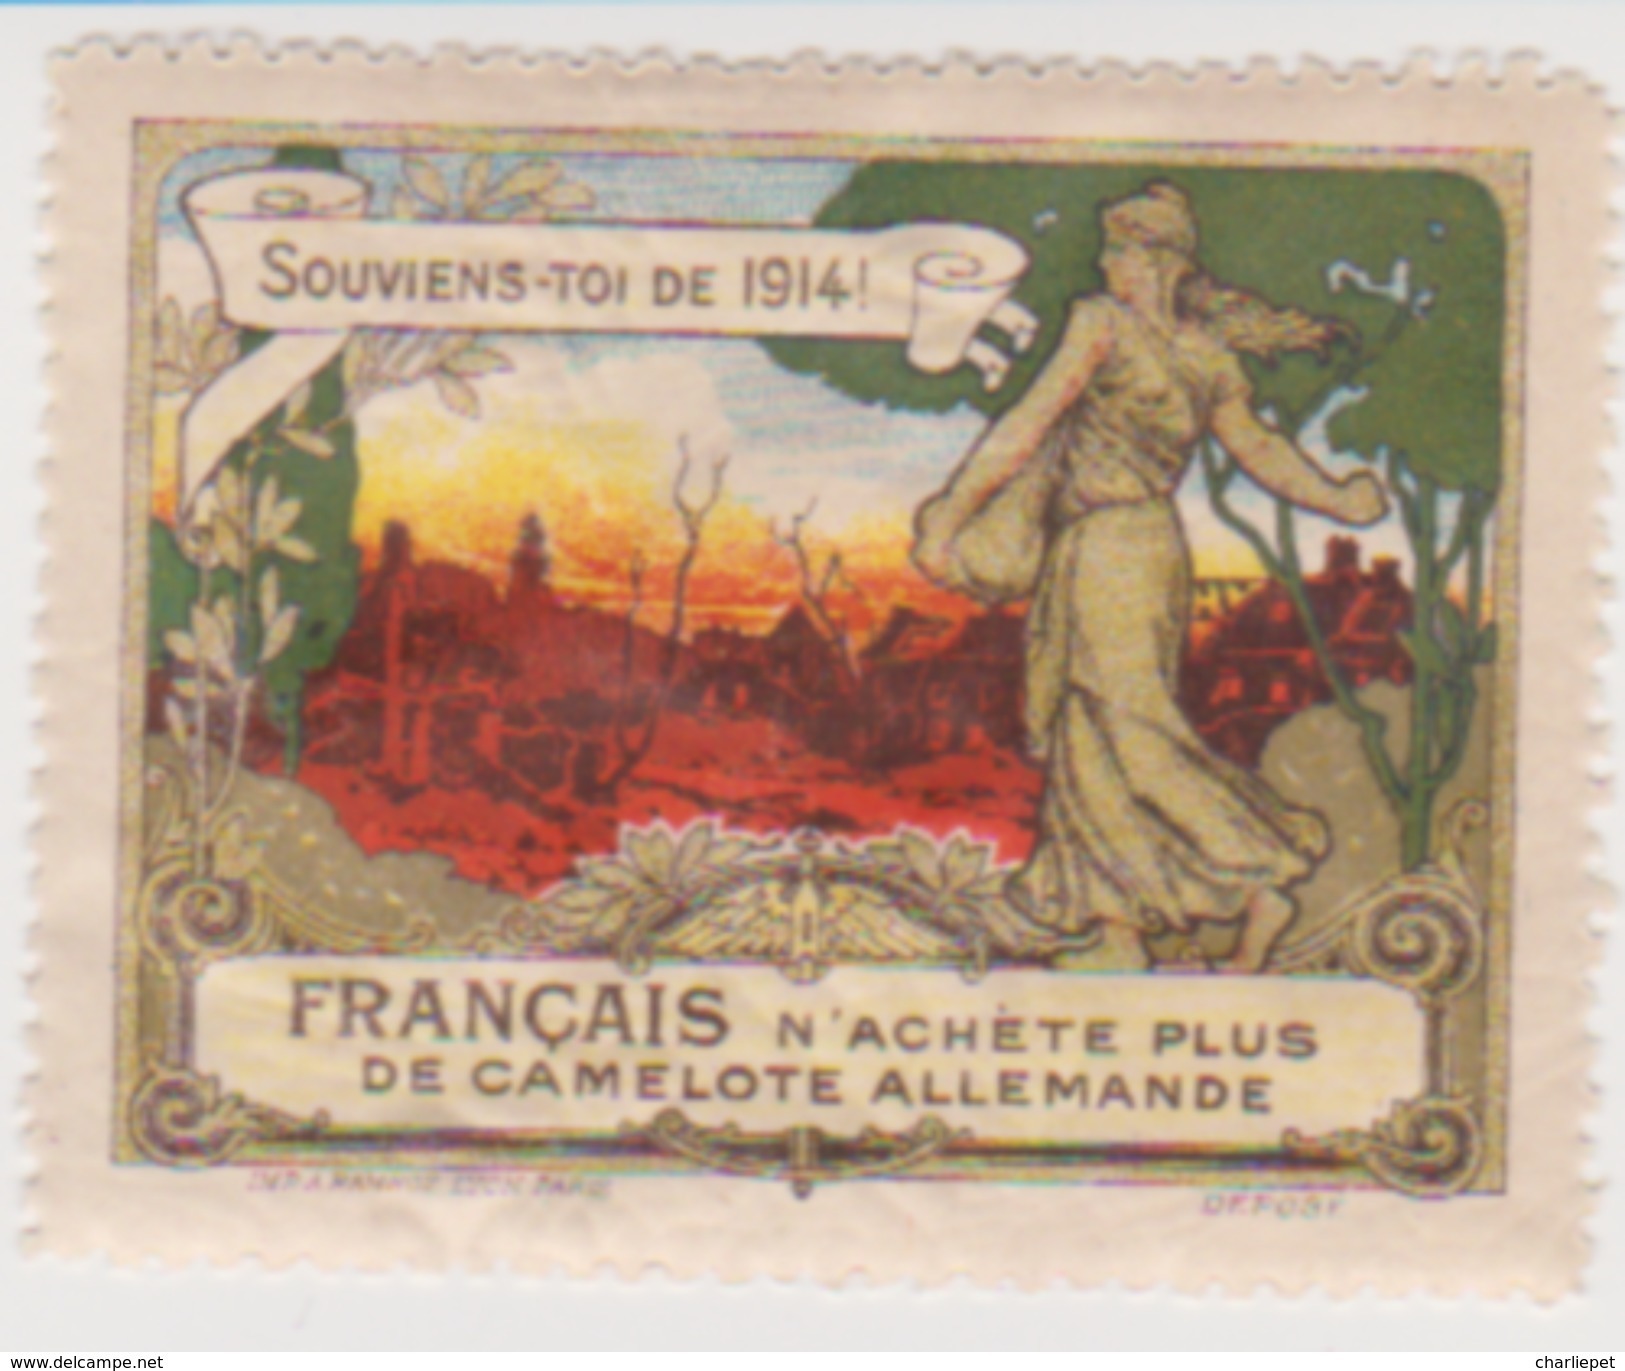 France WWI Francais N'achete Plus De Camelote Allemande Stamps Vignette Poster Stamp - Military Heritage